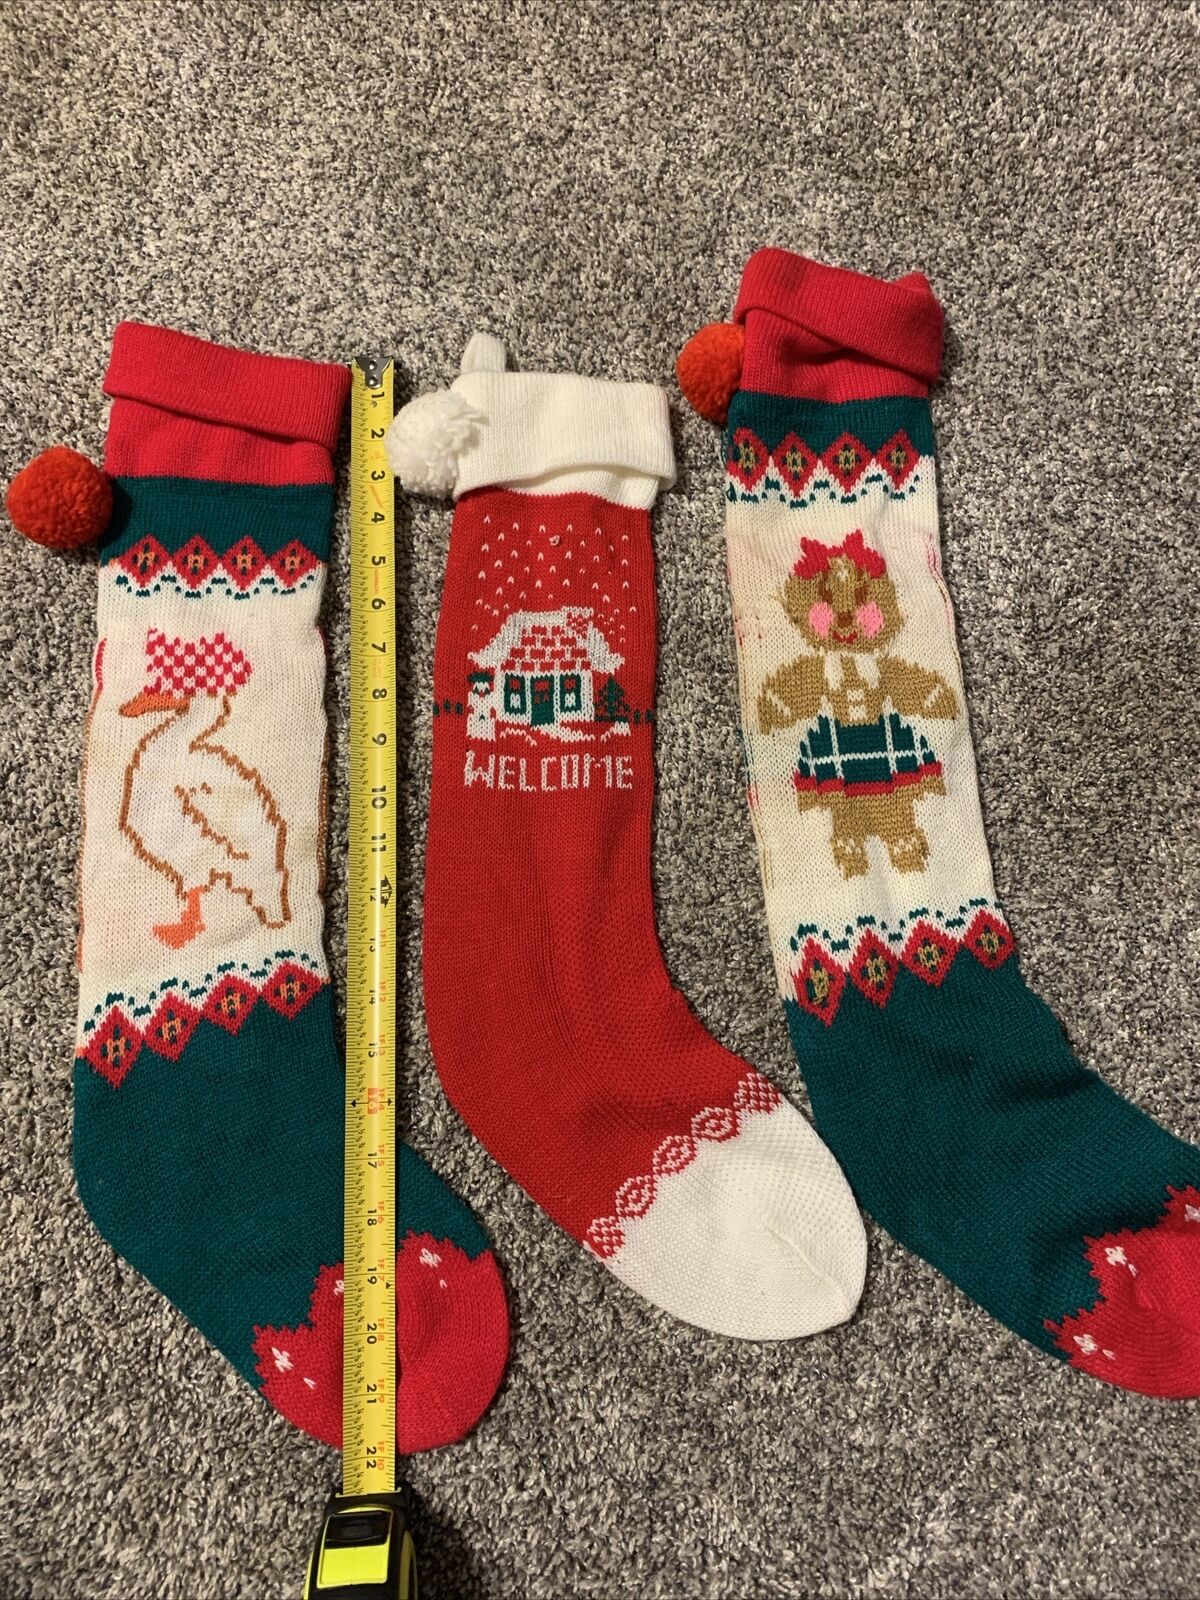 Lot 3 VNT OLD Knit Christmas  Stockings 23” Long w/ PomPom